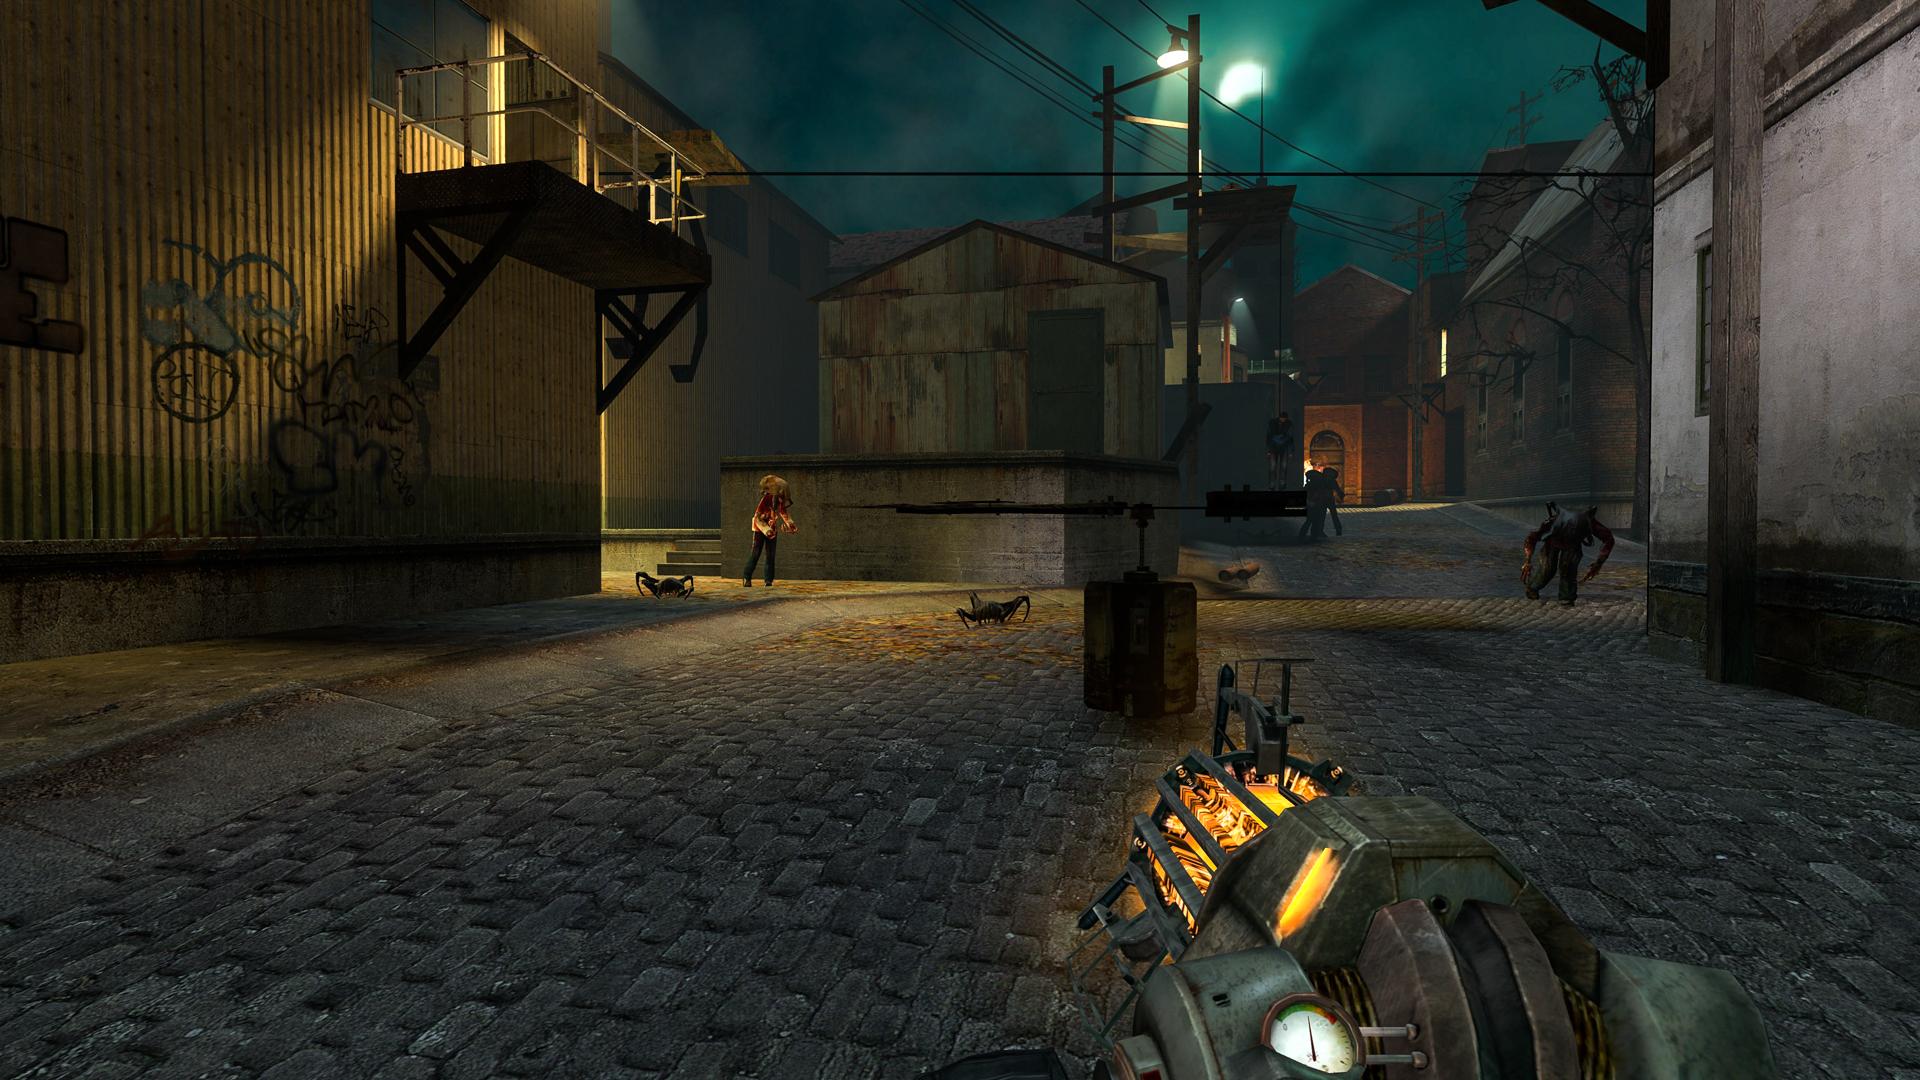 Screenshot №3 from game Half-Life 2: Update